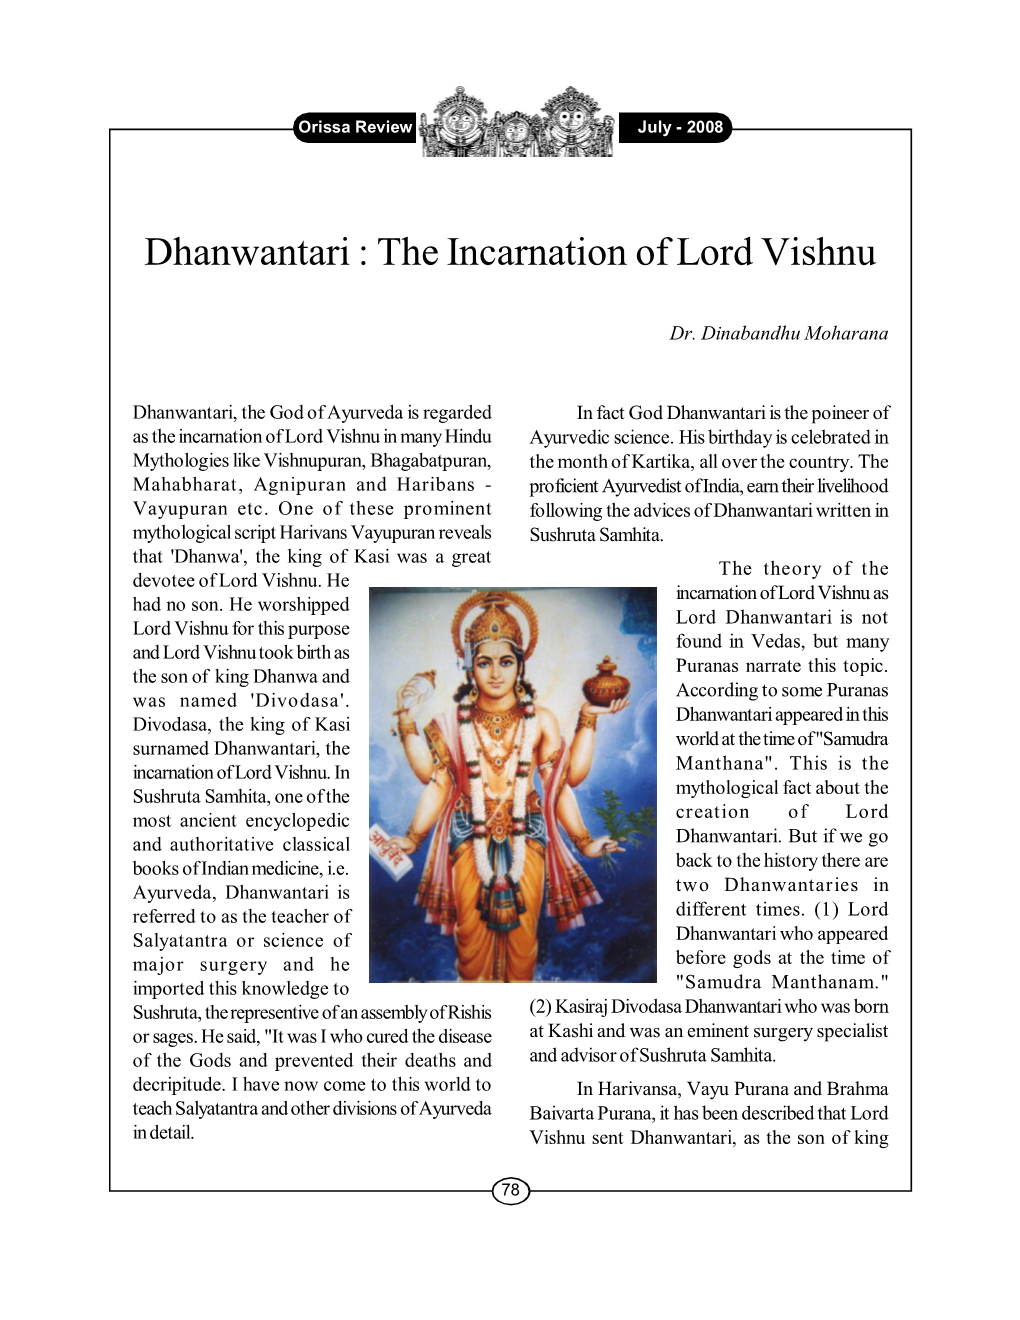 Dhanwantari : the Incarnation of Lord Vishnu